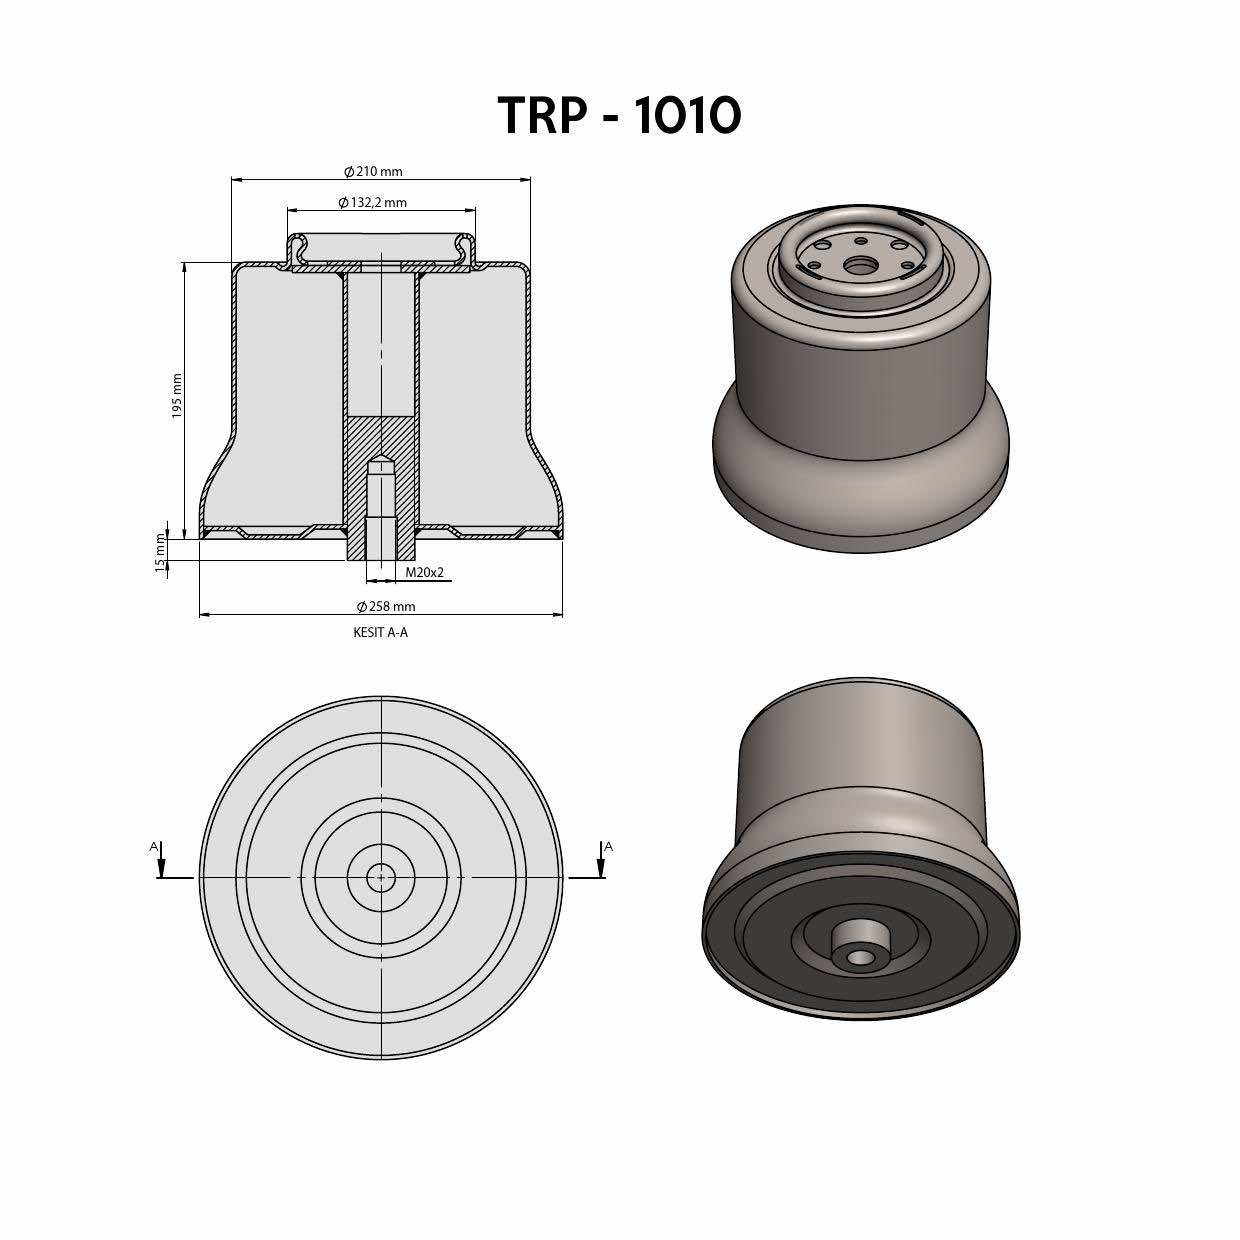 TRP-1010